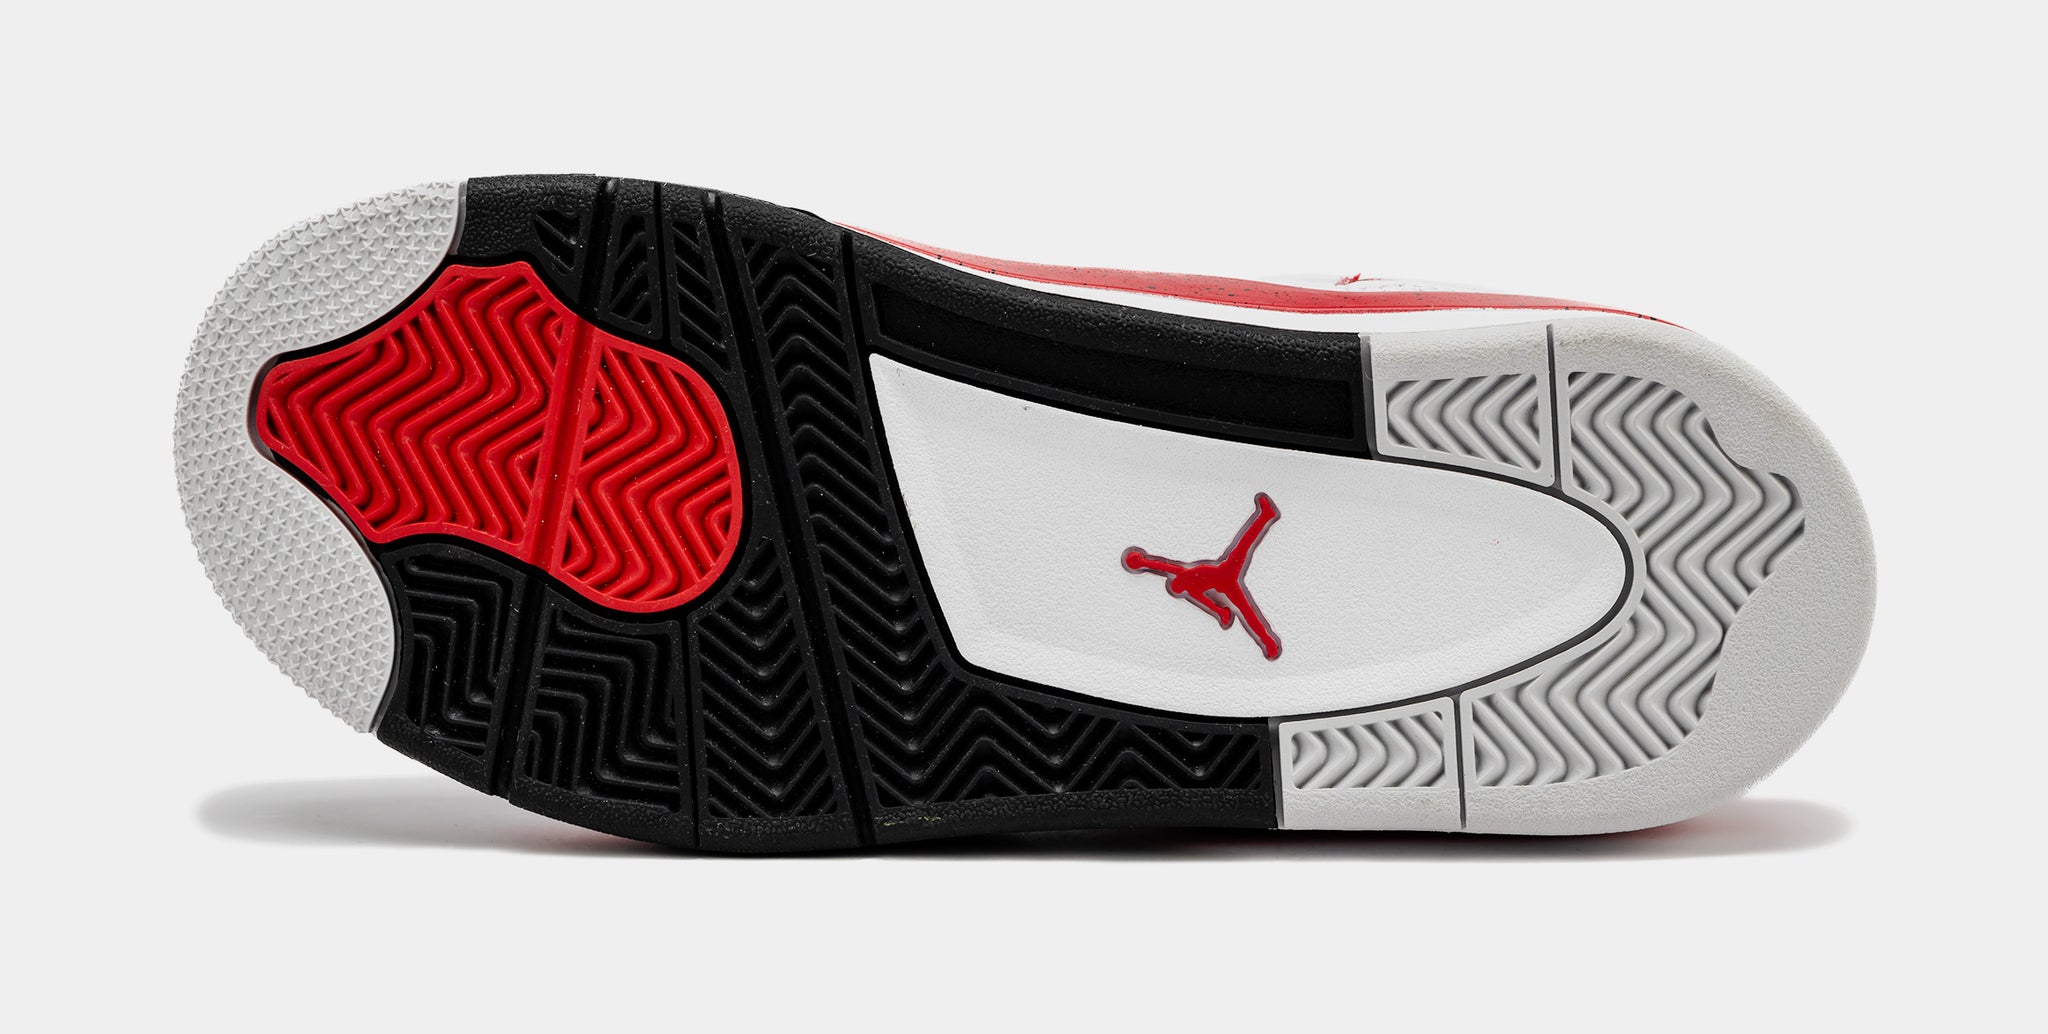 Jordan Brand Jordan 4 Retro'Red Cement' (Preschool) WHITE/FIRE  RED-BLACK-GREY